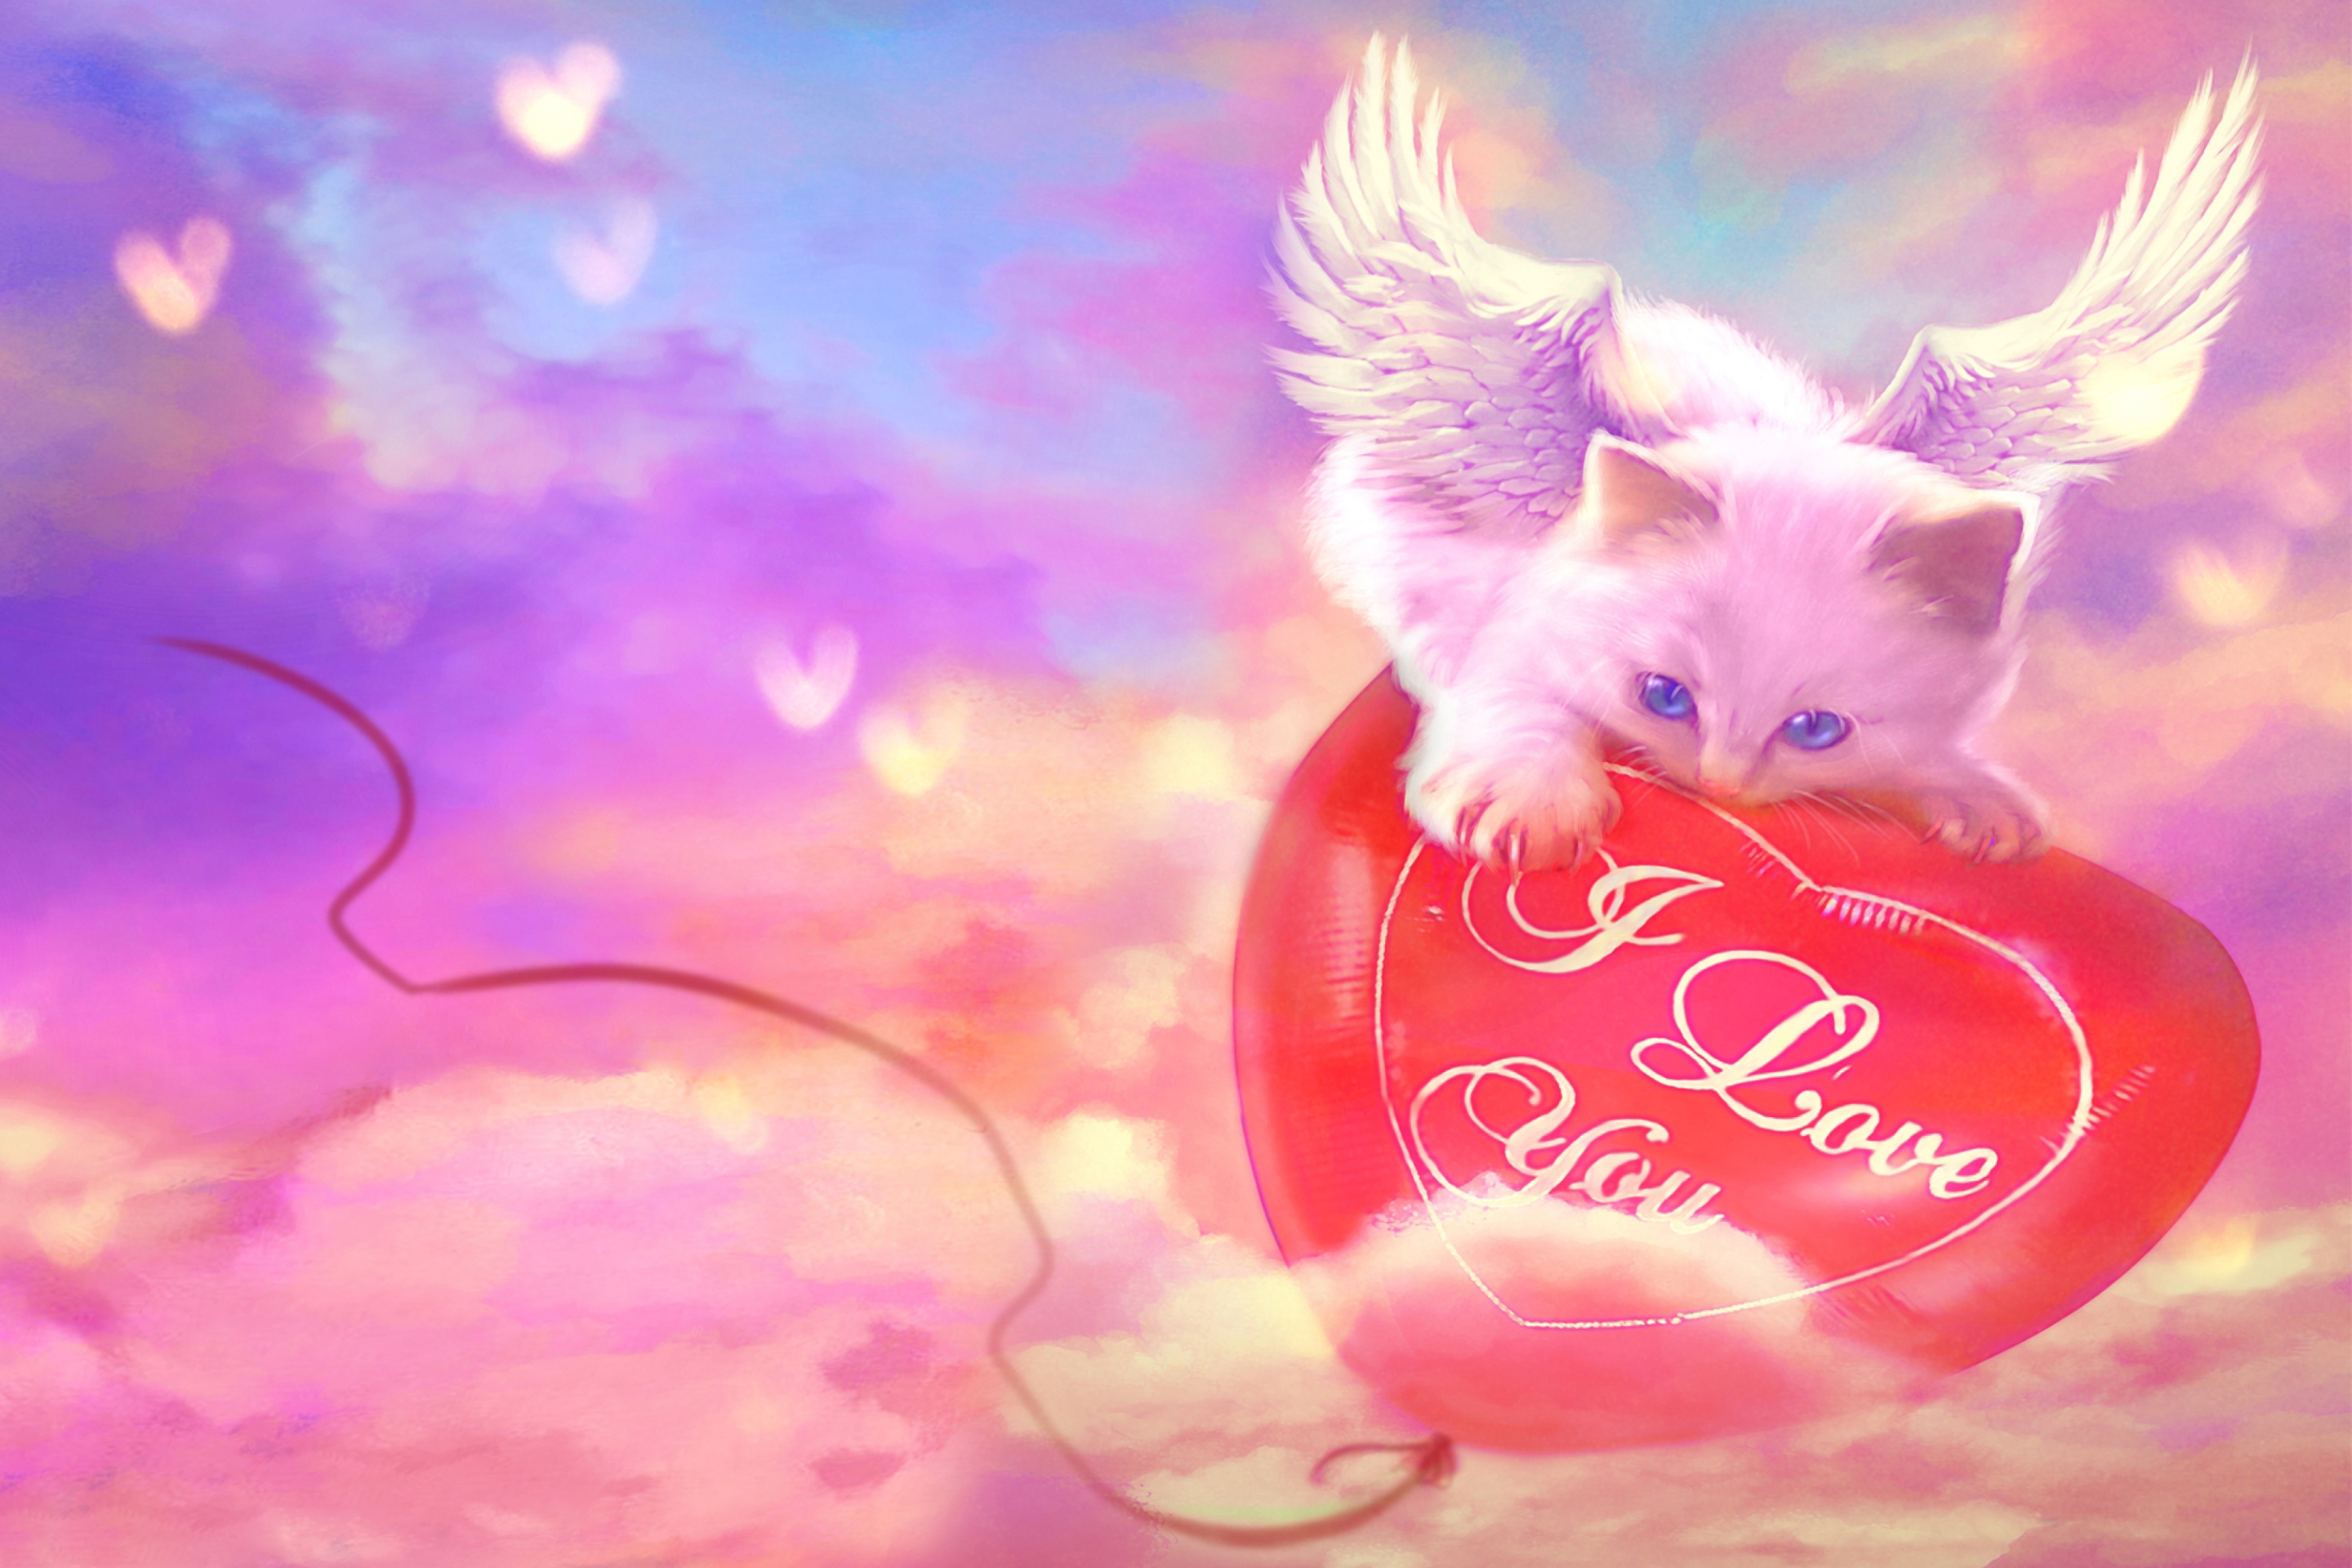 На вайбер красивую открытку. Котенок с сердечком. Картиночки с котиками и сердечками. Красивые картиночки. Открытка с днём рождения с котятами.